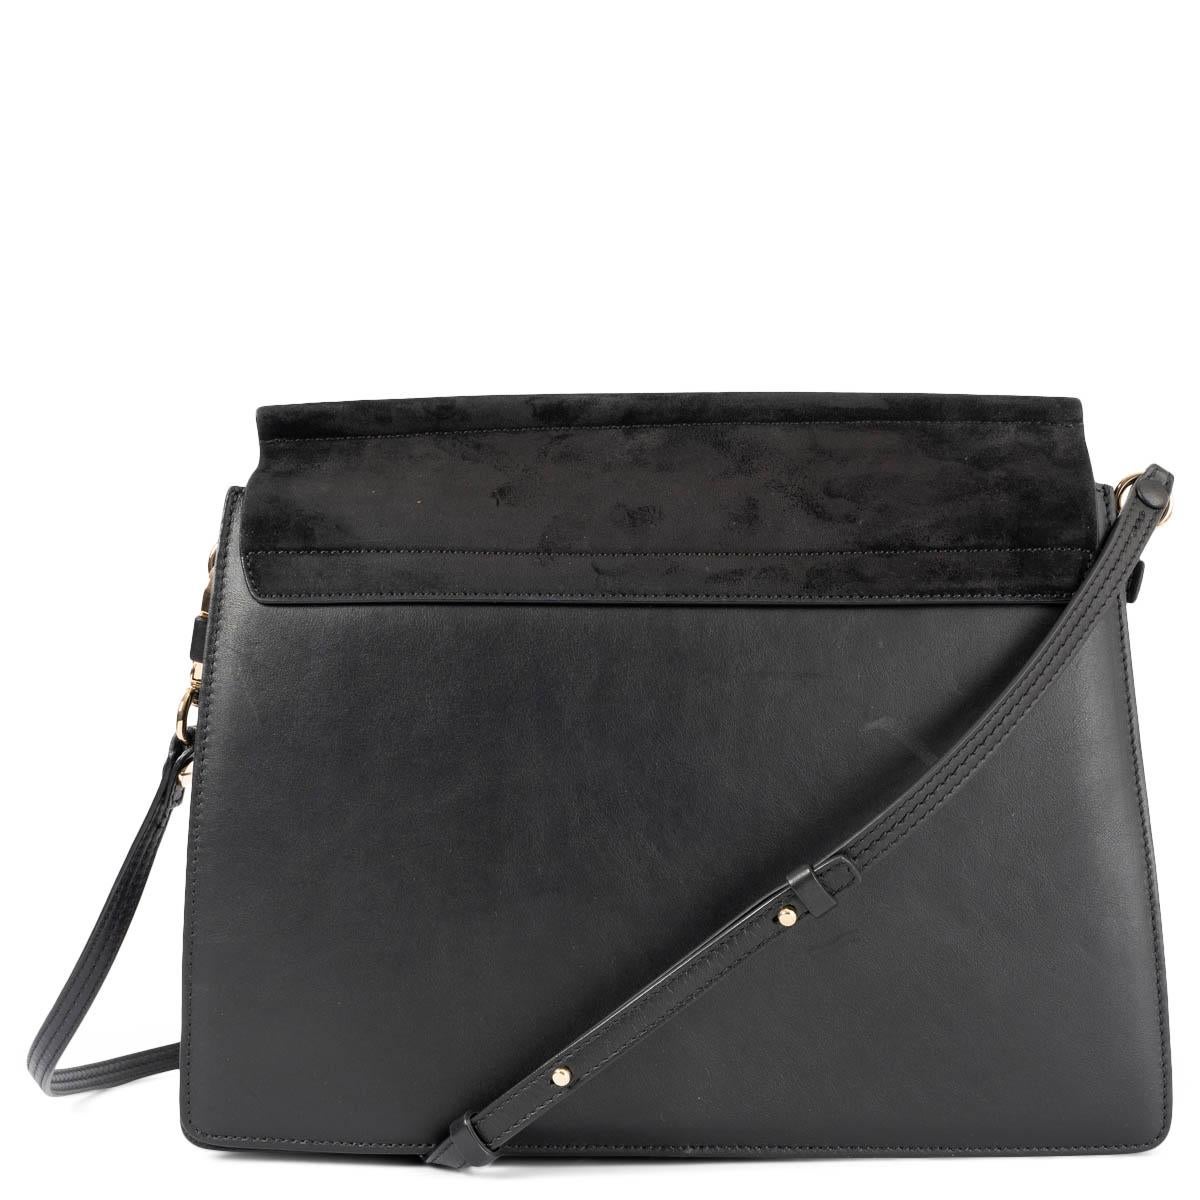 Women's CHLOE black leather & suede FAYE MEDIUM Shoulder Bag